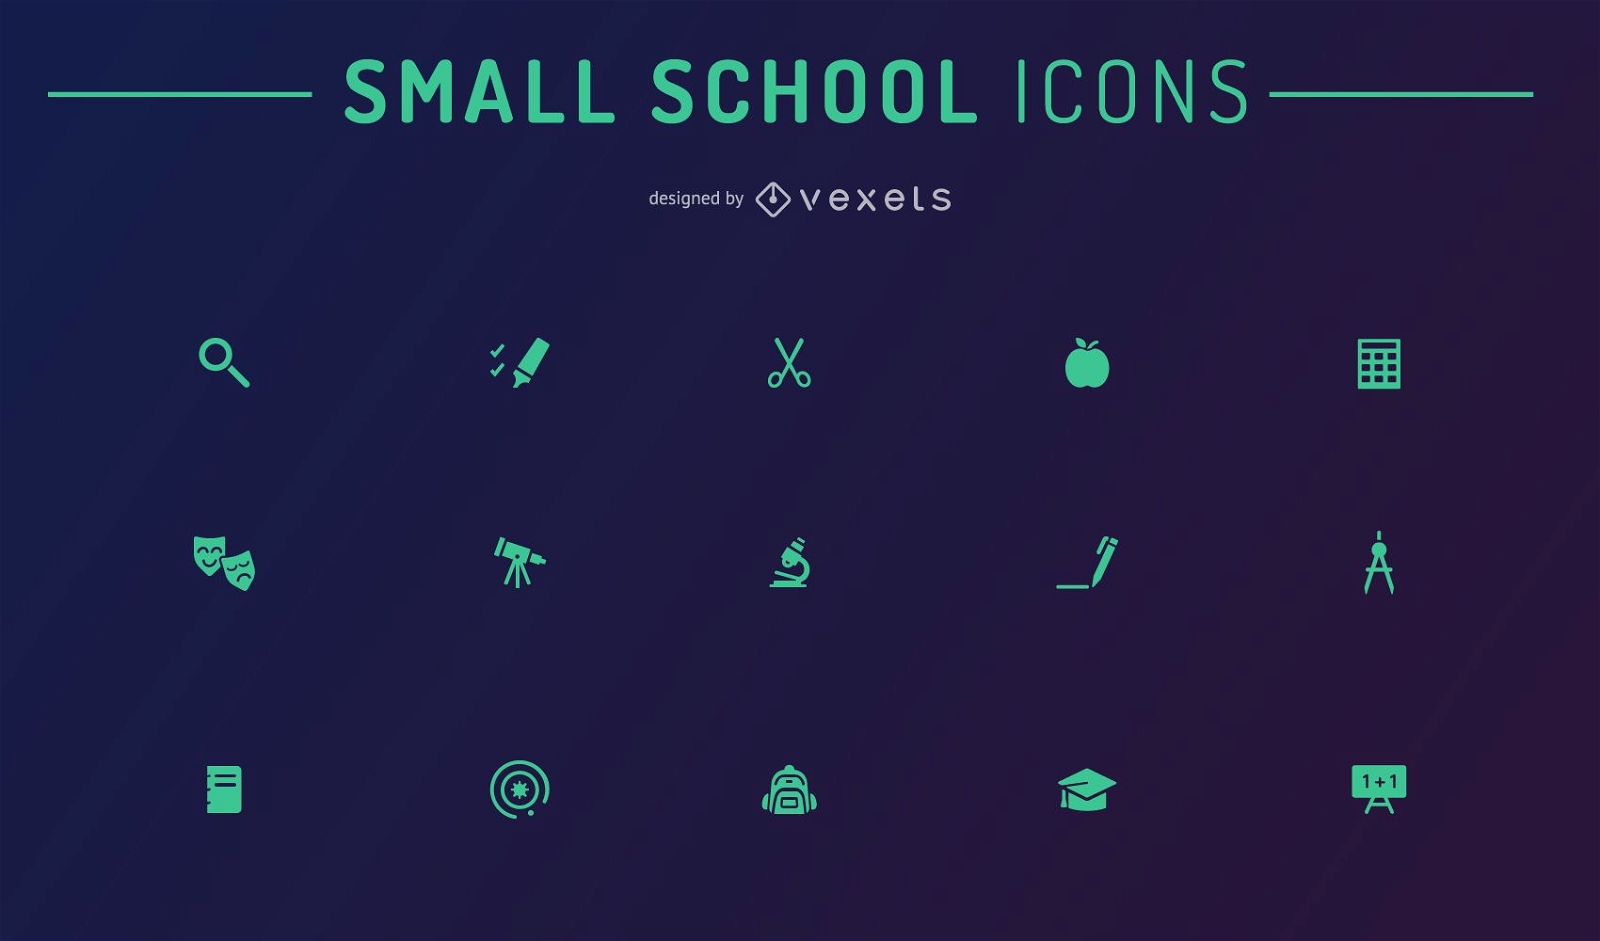 Small school icons set